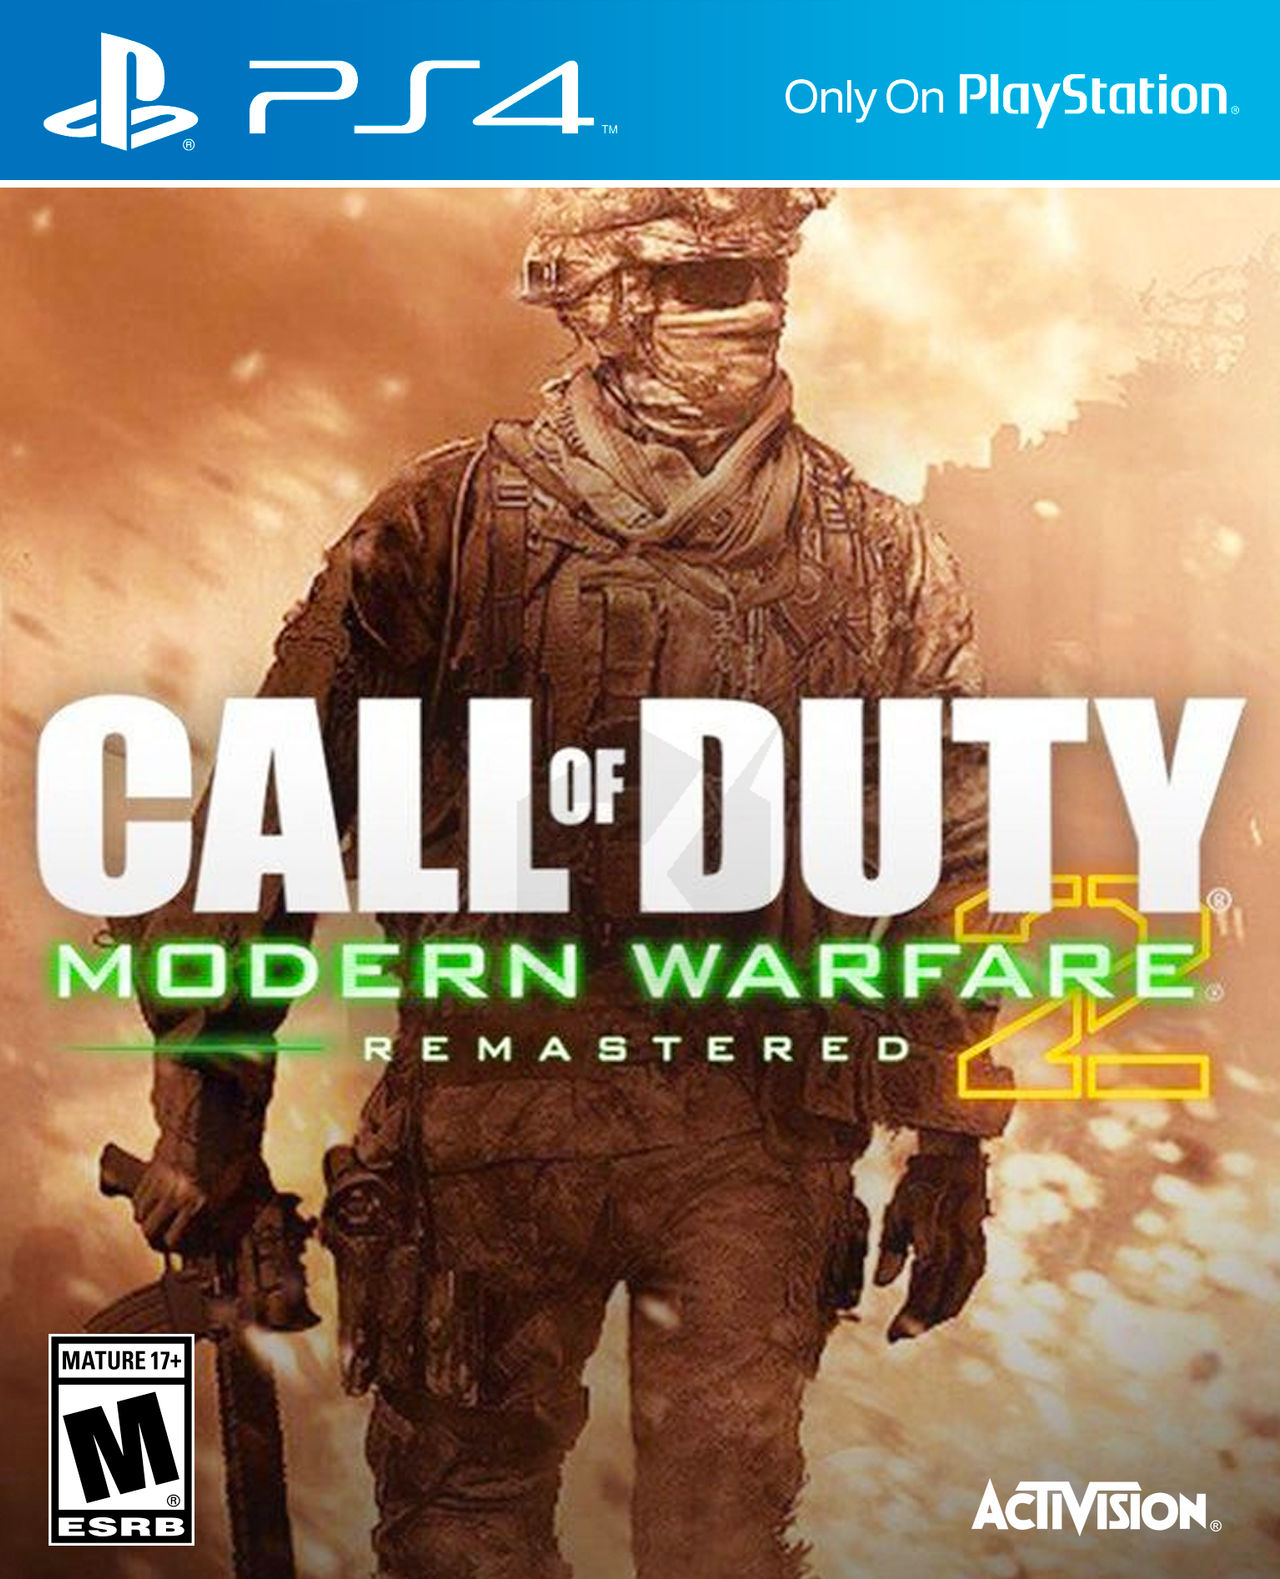 Call of duty modern warfare 2 playstation 4 cover